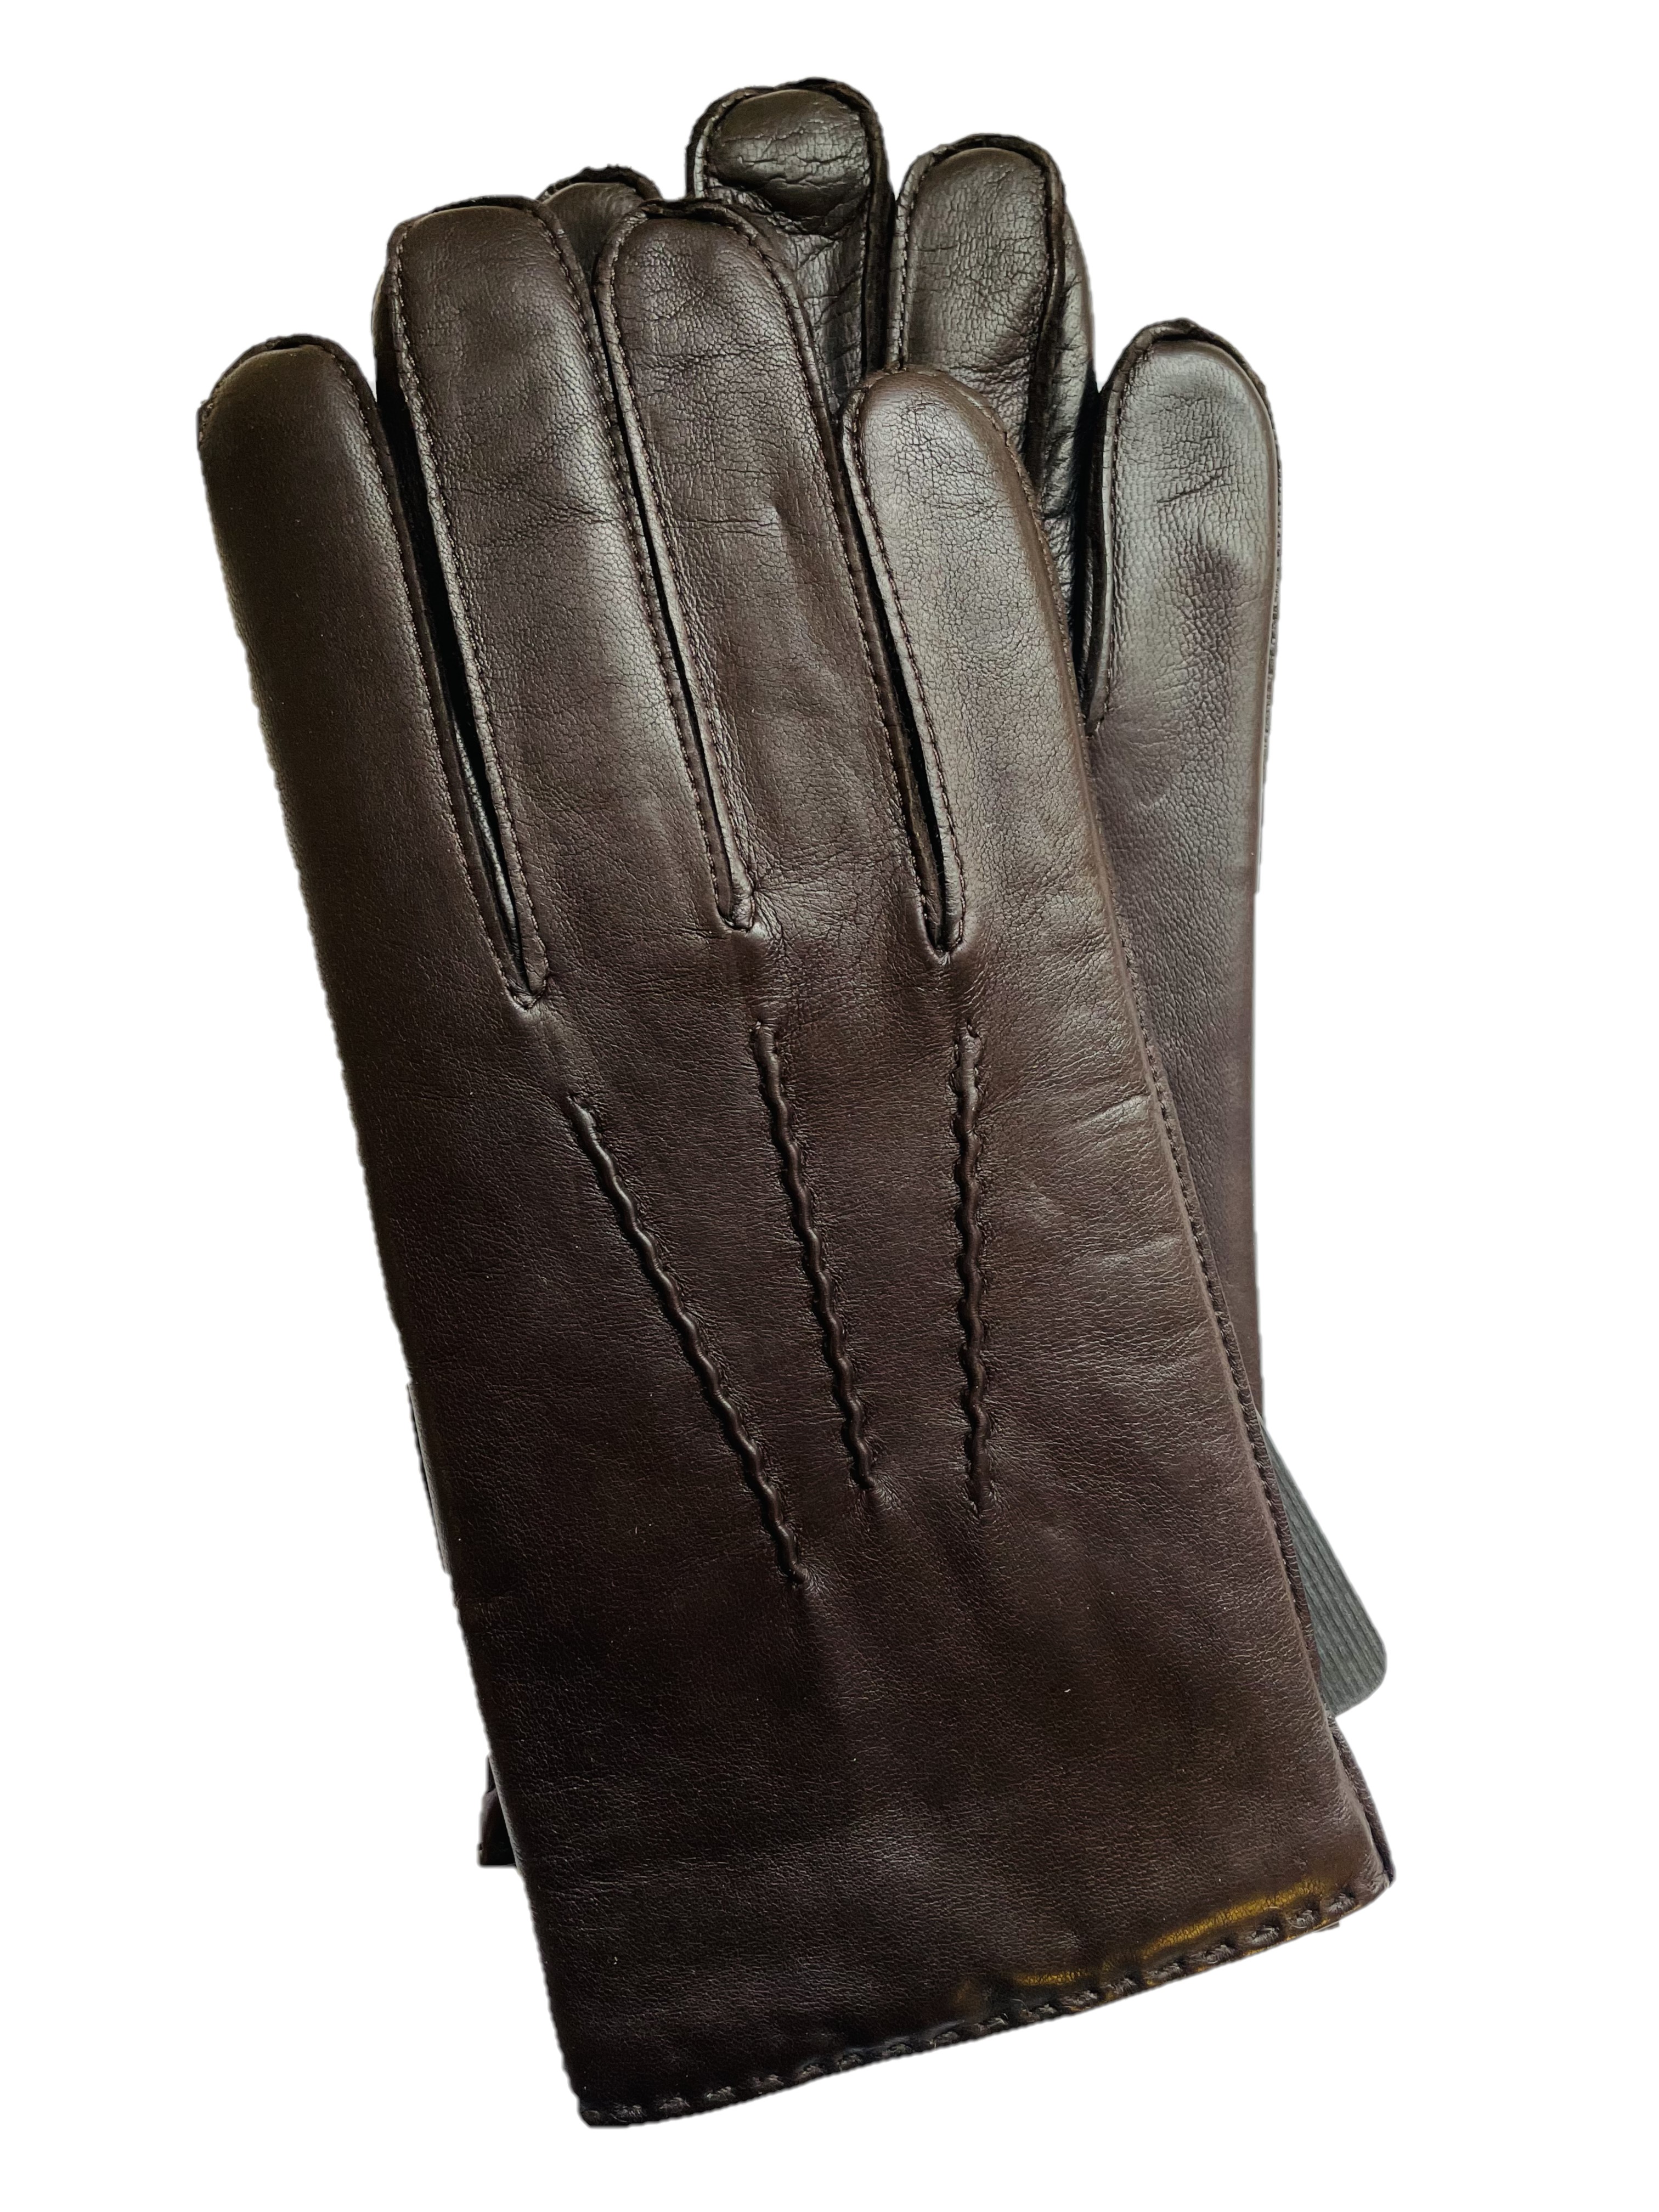 Handsewn Lambskin Brown Dress Gloves